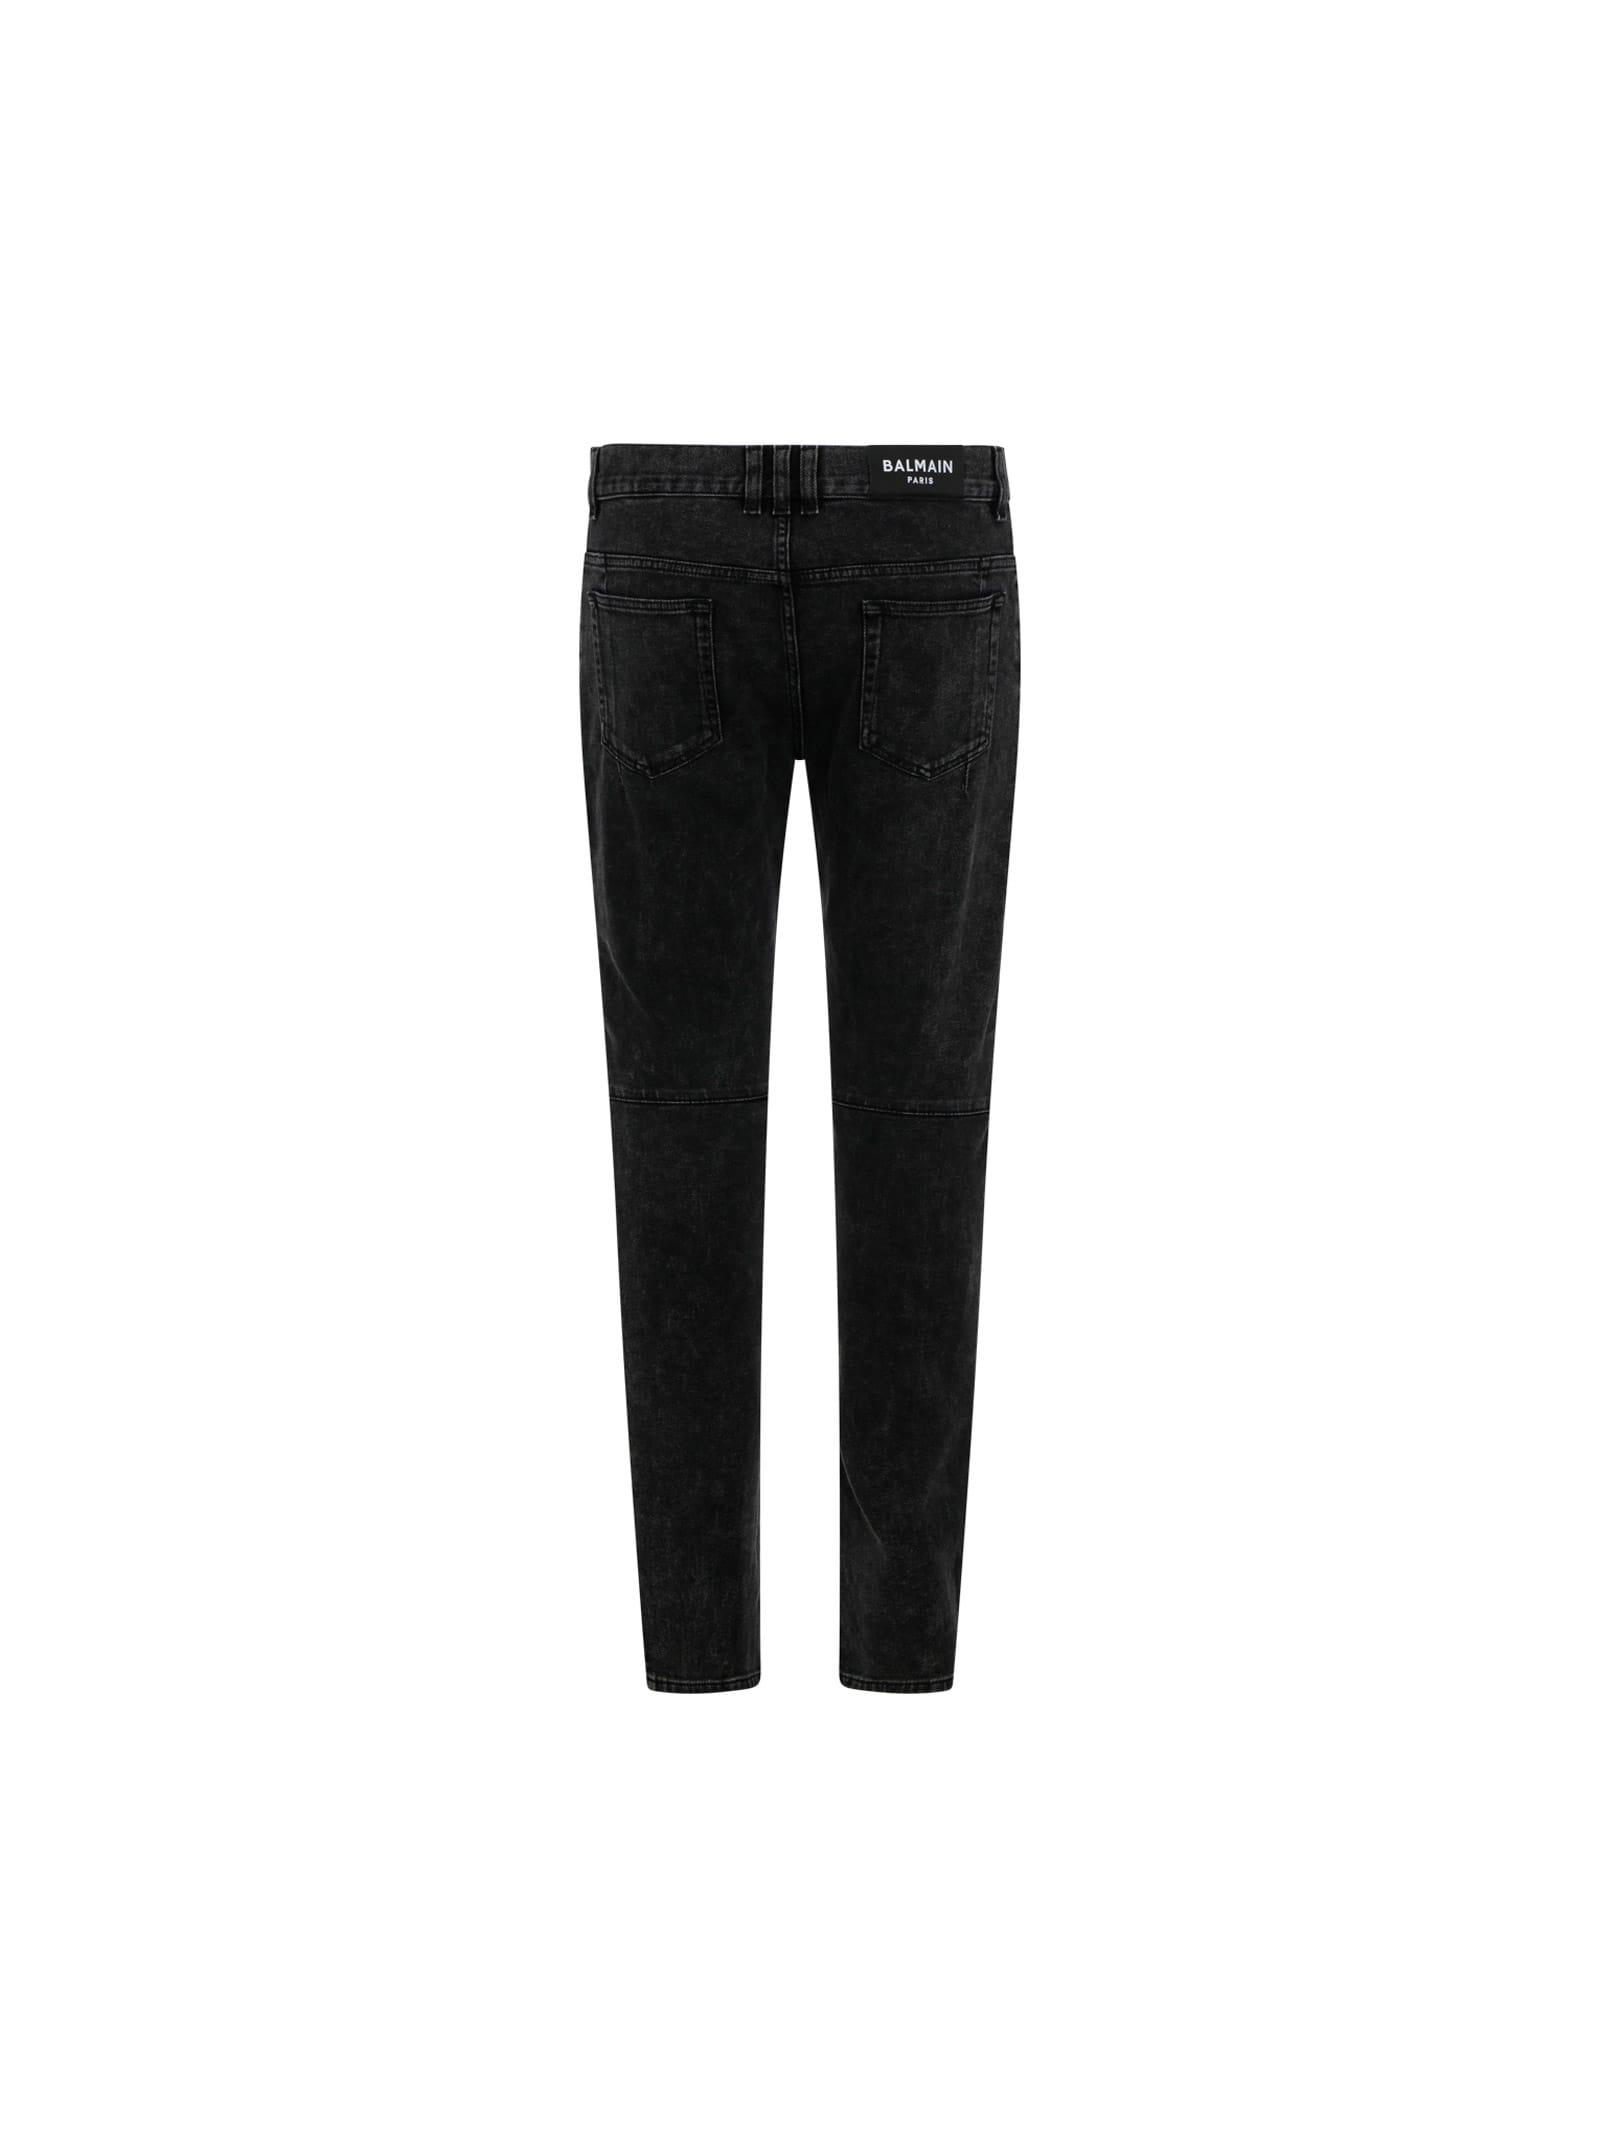 Balmain Jeans in Black for Men | Lyst